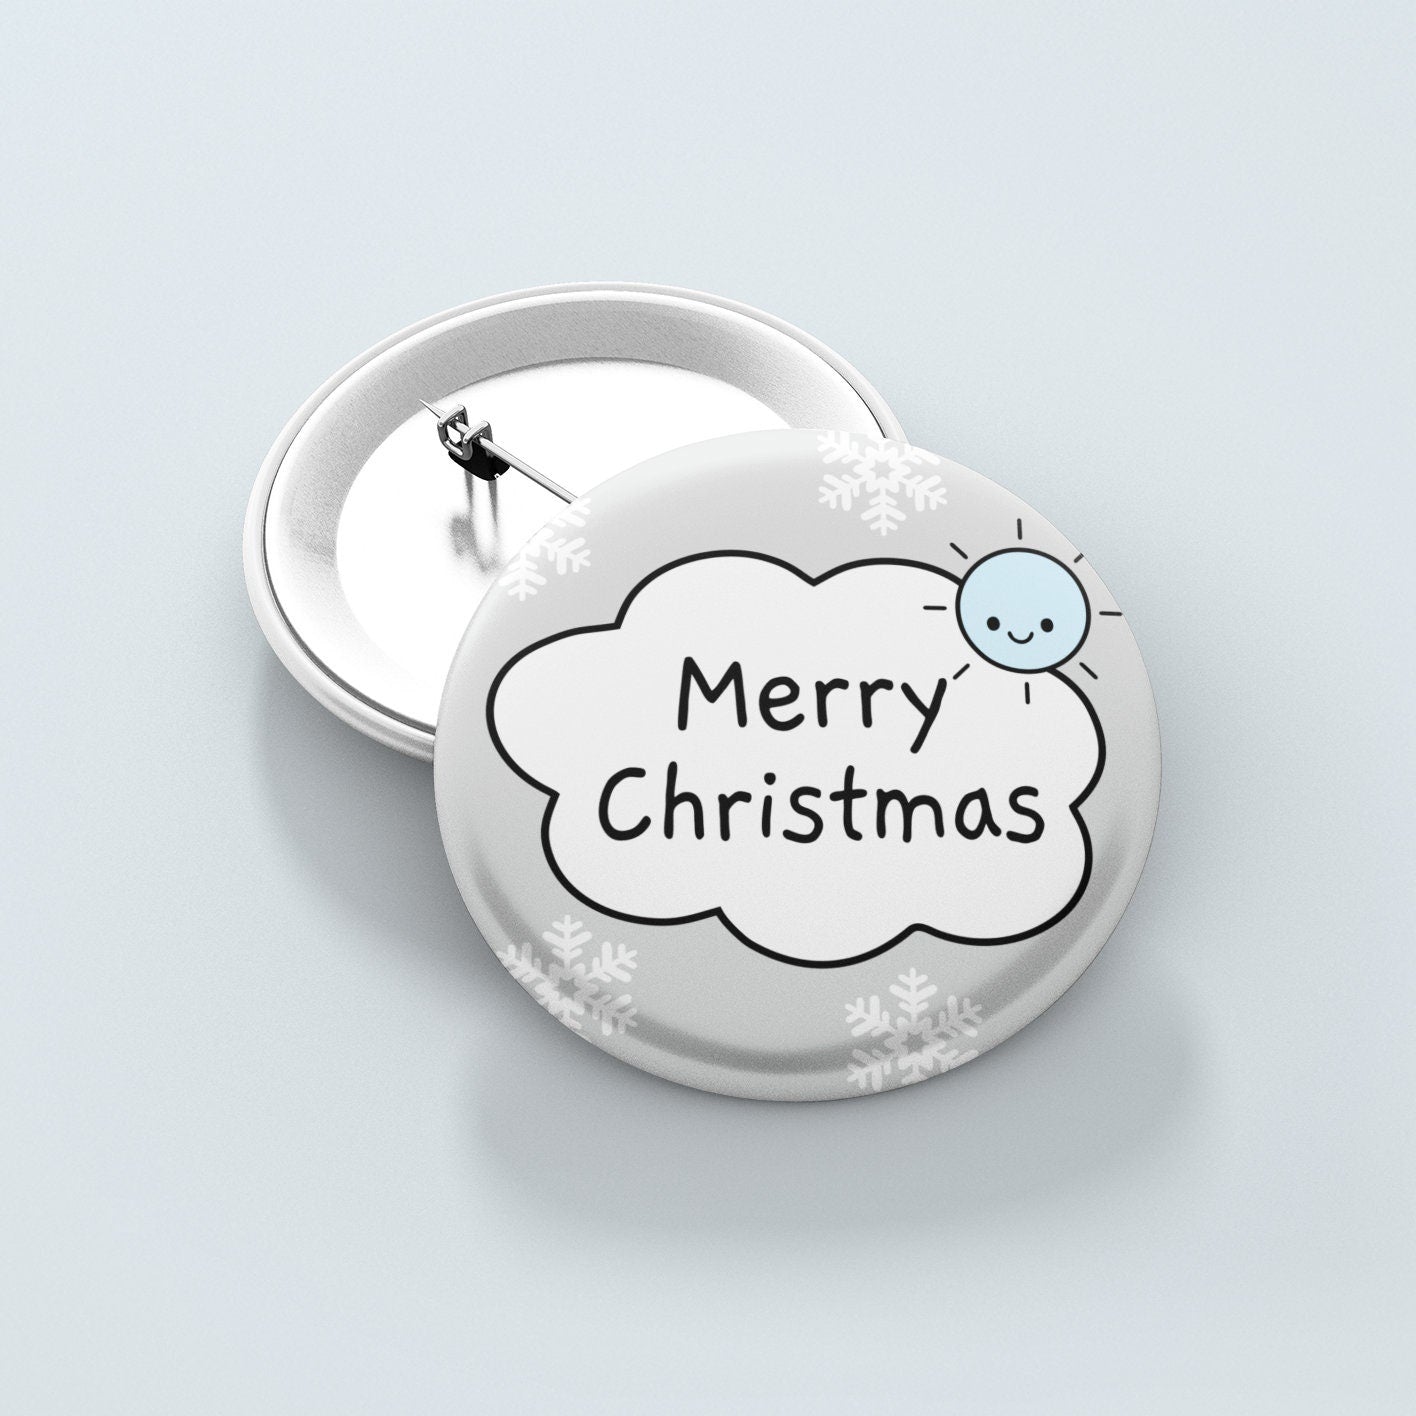 Merry Christmas Pin Badge | Christmas Pin - Xmas badges - Small Christmas Gift - Cute Pin Badges